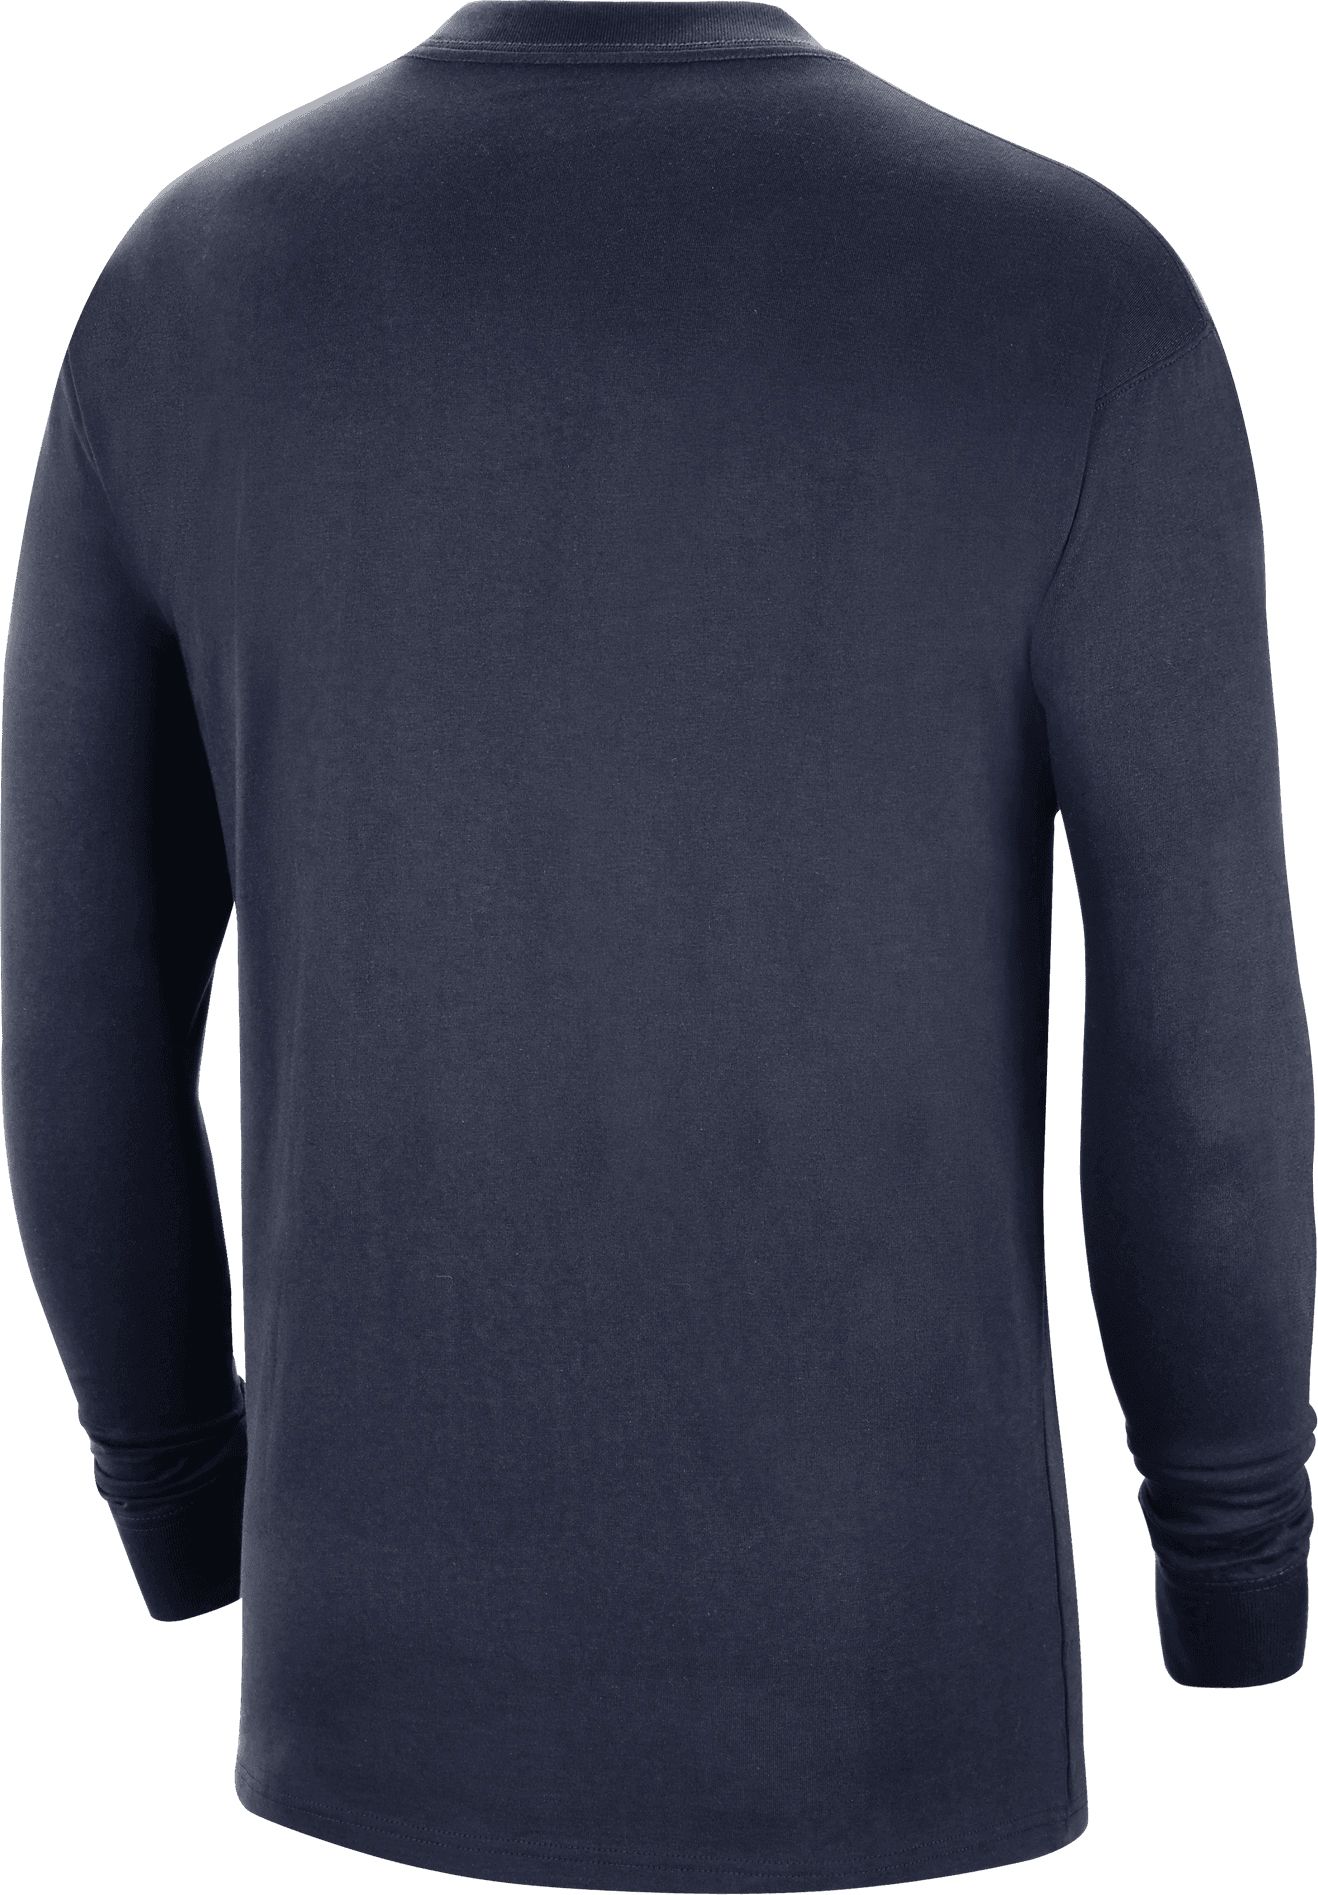 Nike Men's Gonzaga Bulldogs Blue Max90 Long Sleeve T-Shirt